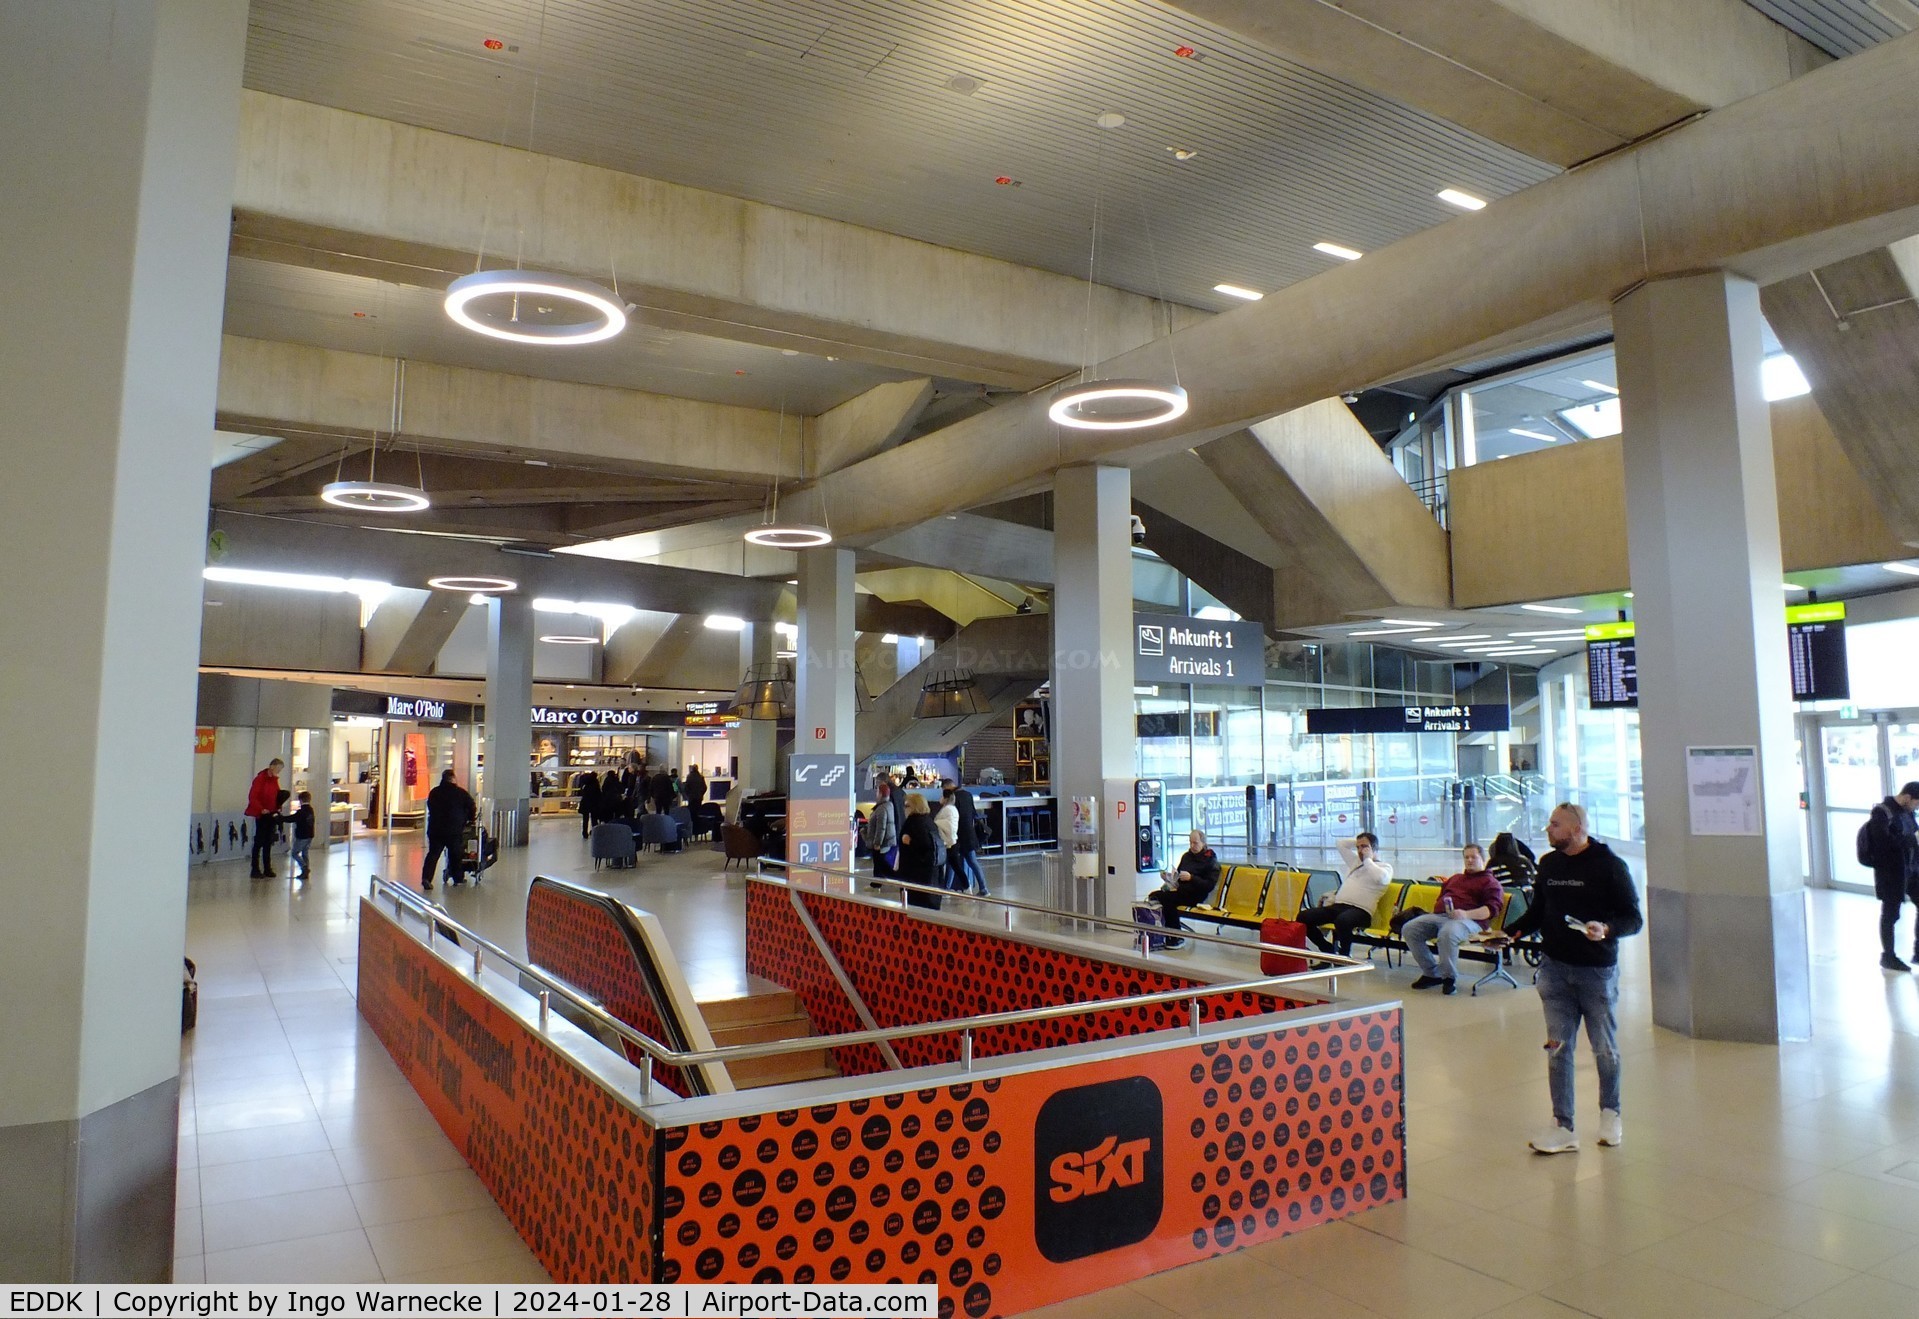 Cologne Bonn Airport, Cologne/Bonn Germany (EDDK) - inside central part of terminal 1 at Köln/Bonn airport